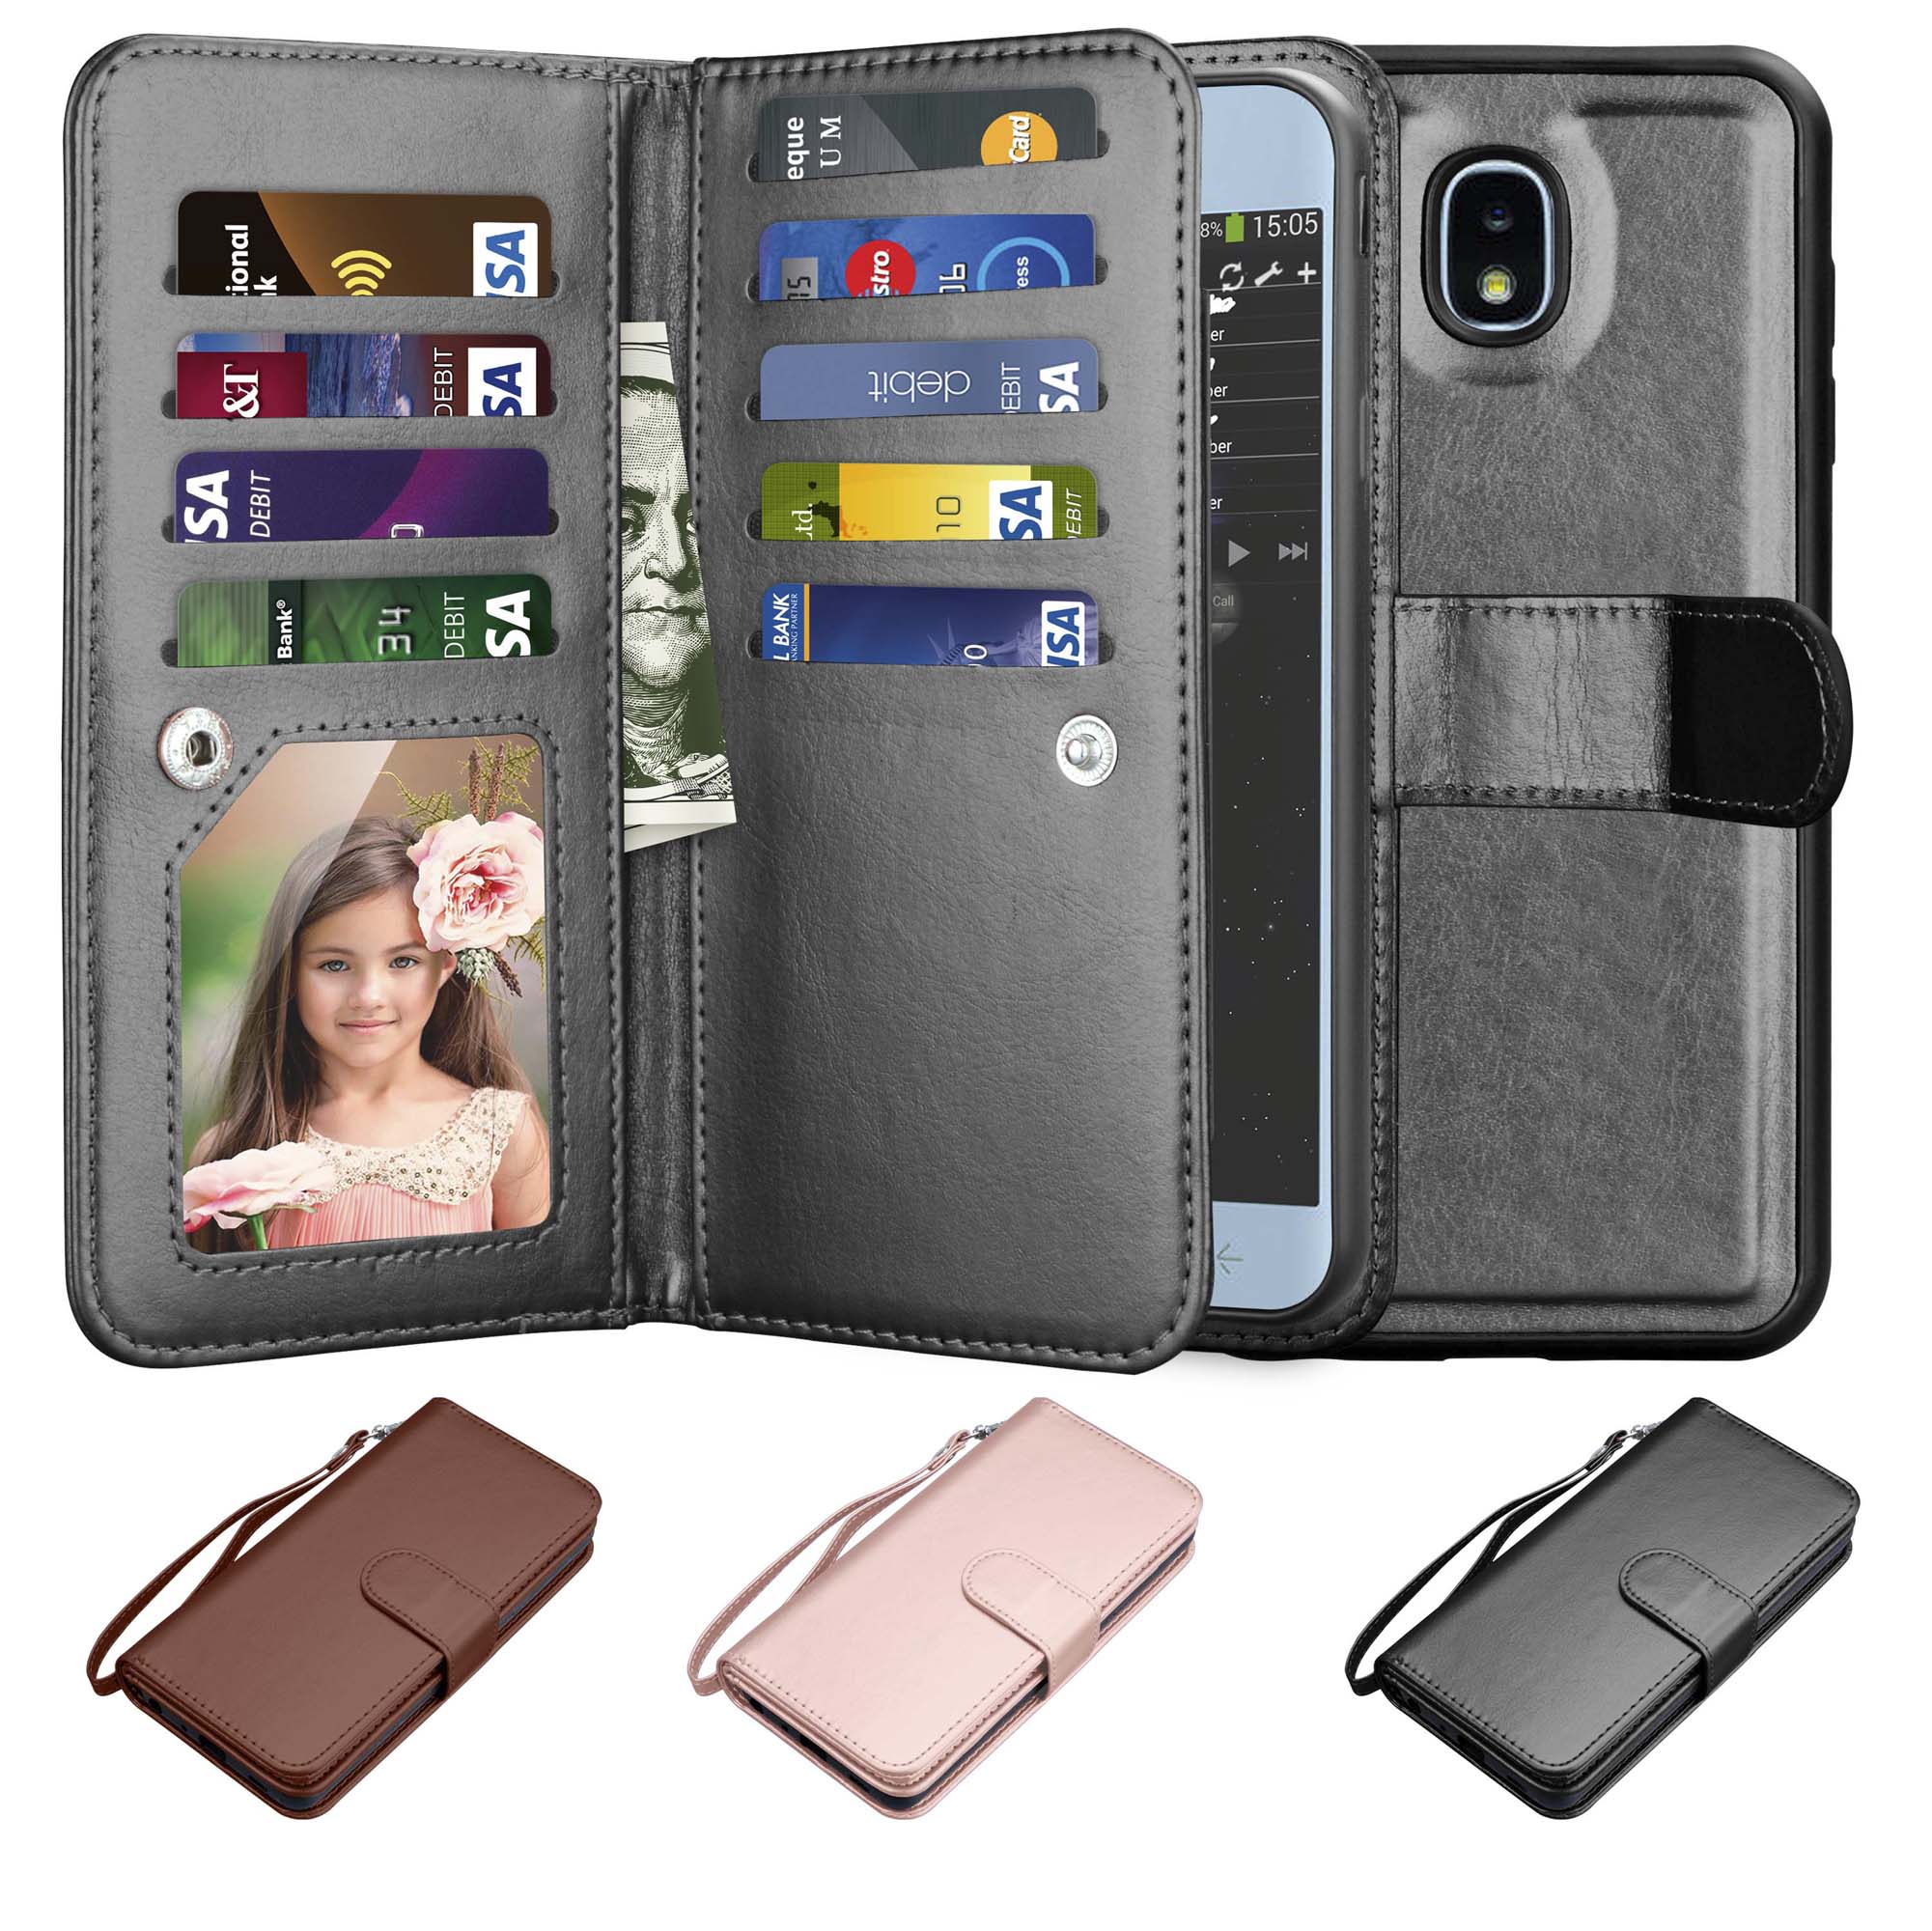 Njjex Wallet Case For 5.5" Samsung Galaxy J7 2018 / J7 V 2nd Gen / J7 Refine / J7 Aero / J7 Eon / J7 Top / J7 Crown / J7 Aura, Wallet Case PU Leather Flip Cover Wrist Strap & Kickstand Black - image 1 of 5